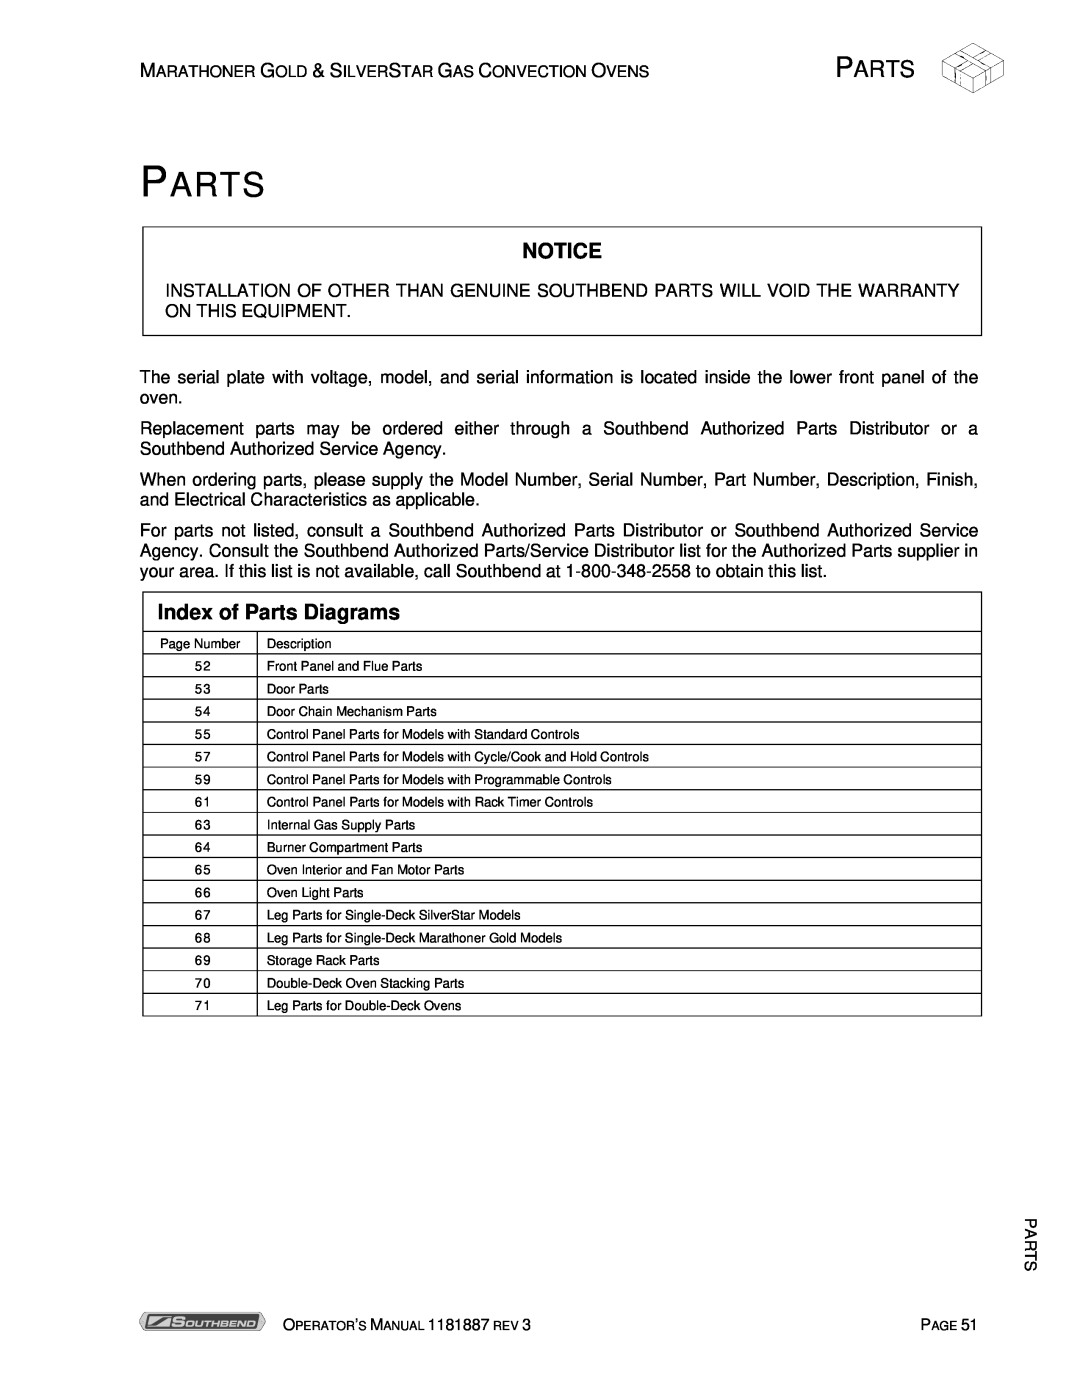 Southbend Marathoner manual Index of Parts Diagrams 